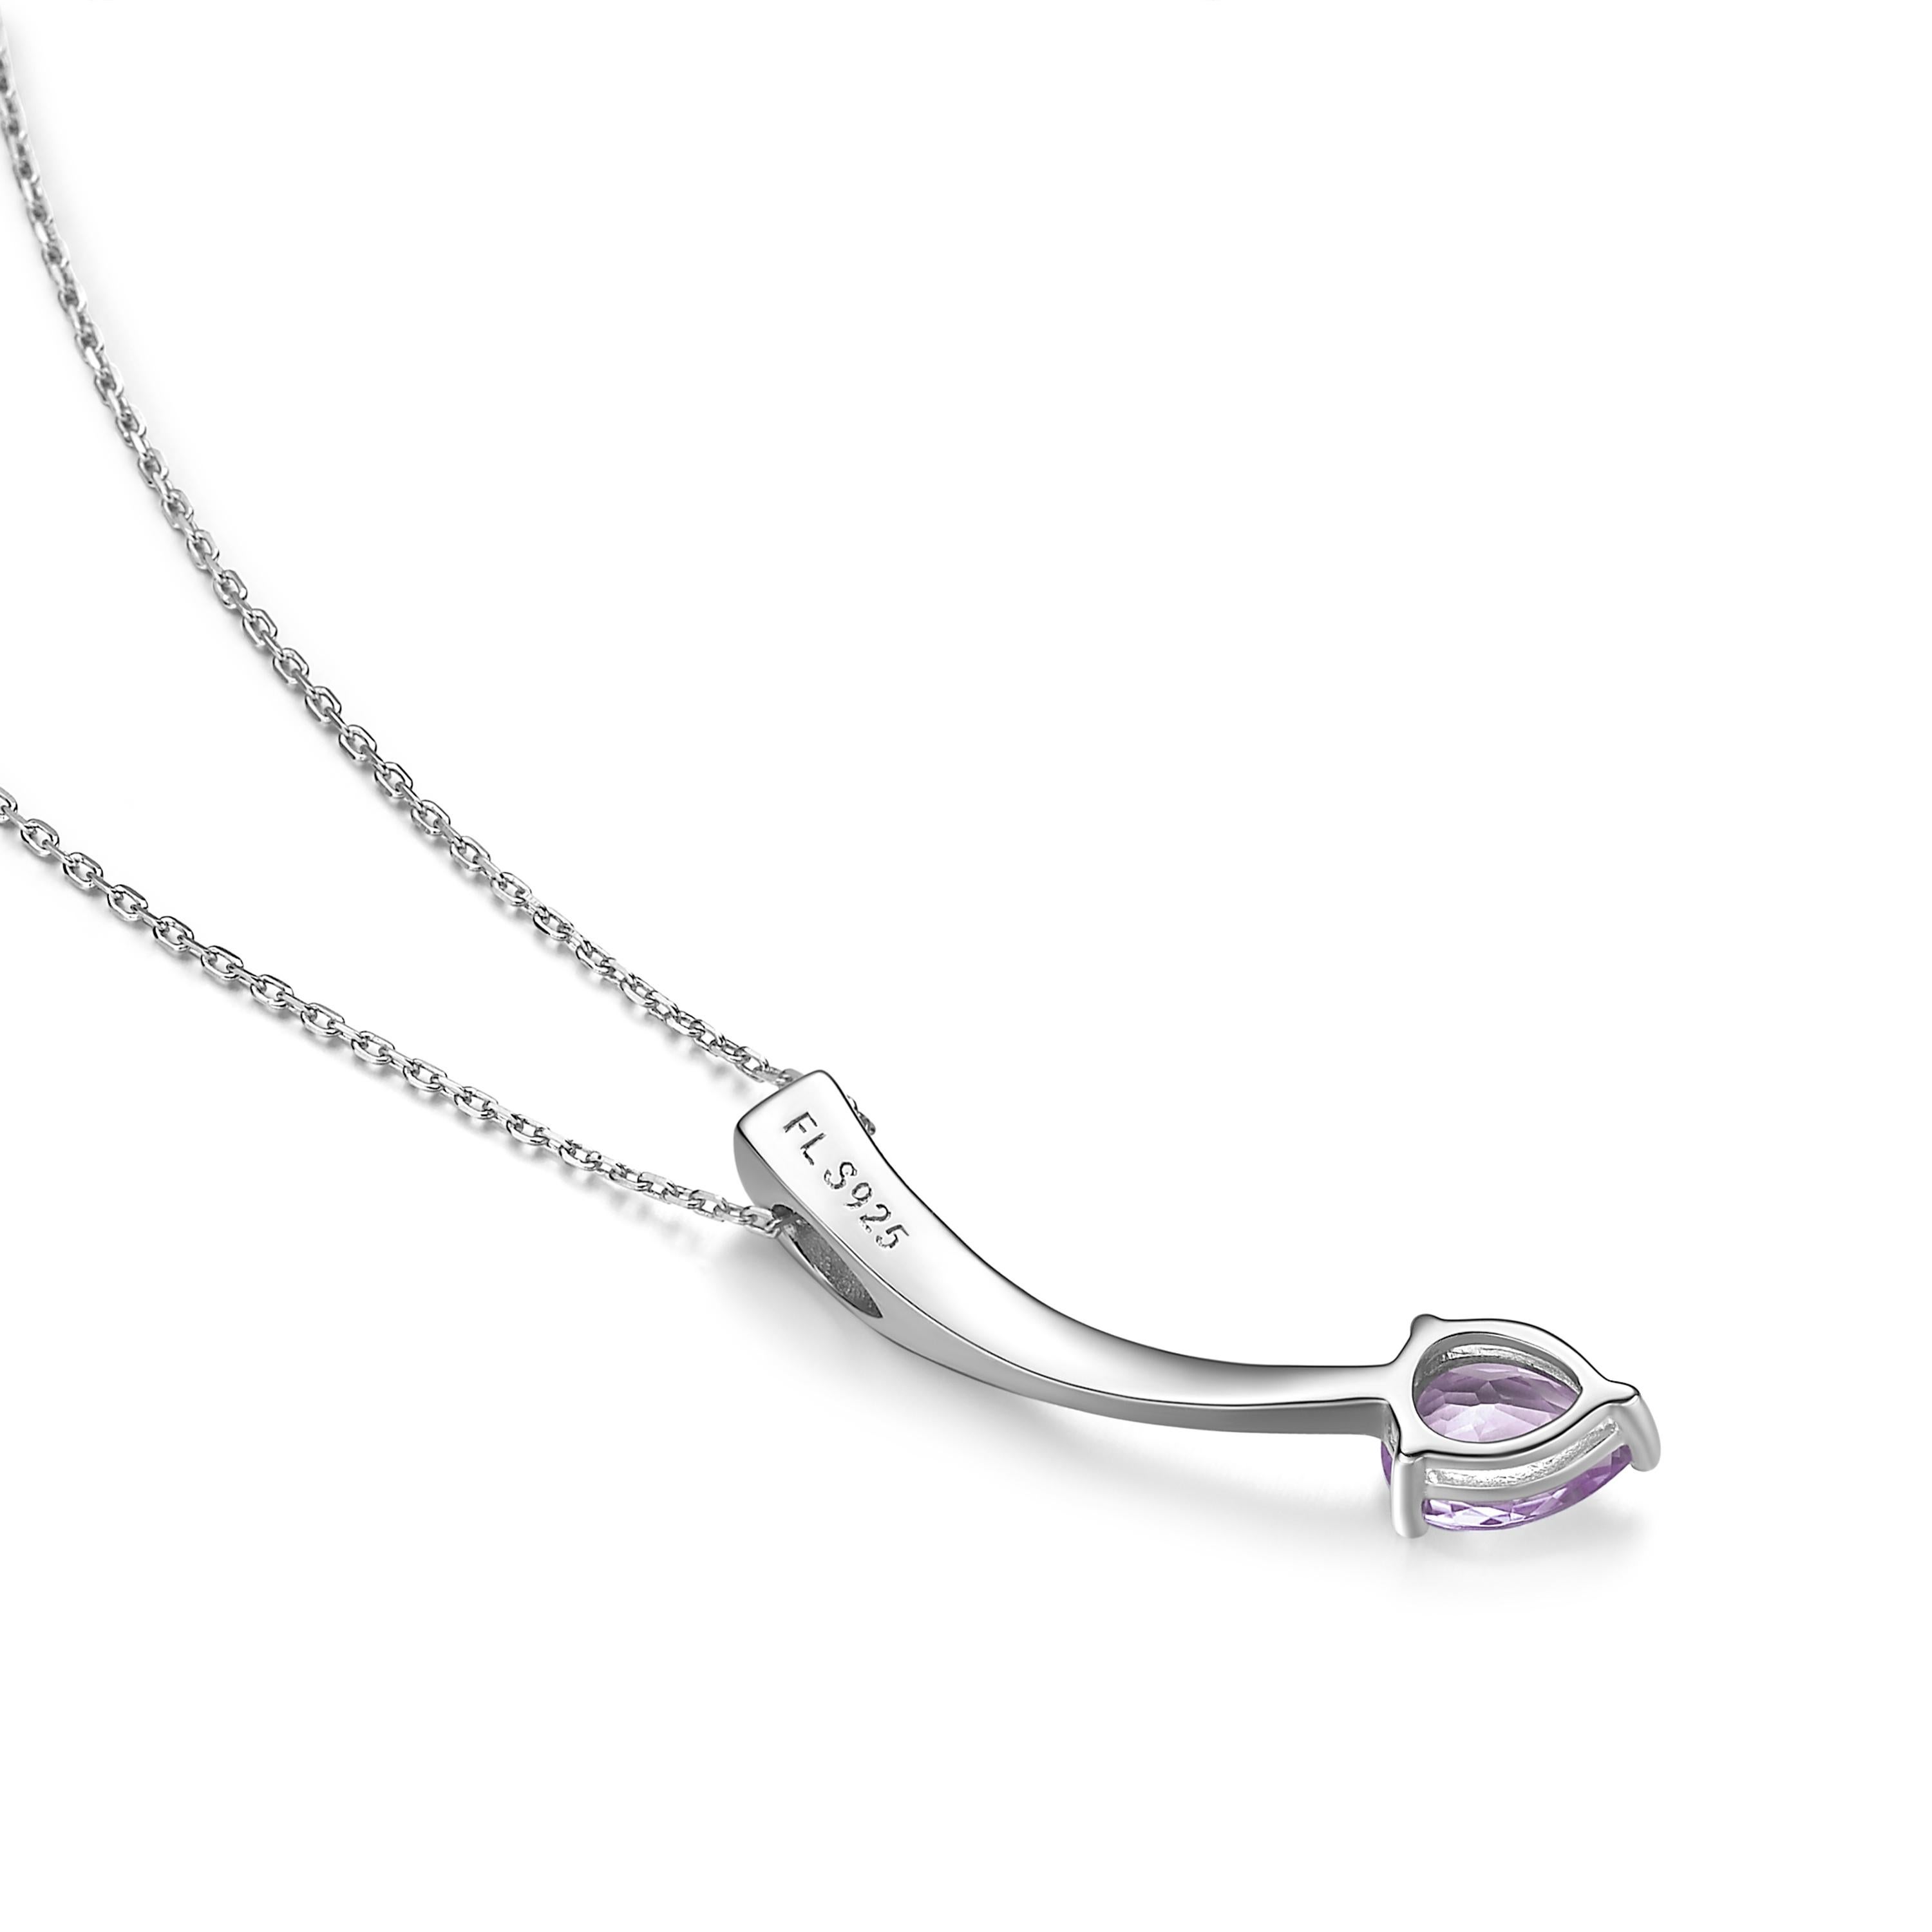 Contemporary Fei Liu Pear Cut Purple Amethyst Cubic Zirconia Sterling Silver Pendant Necklace